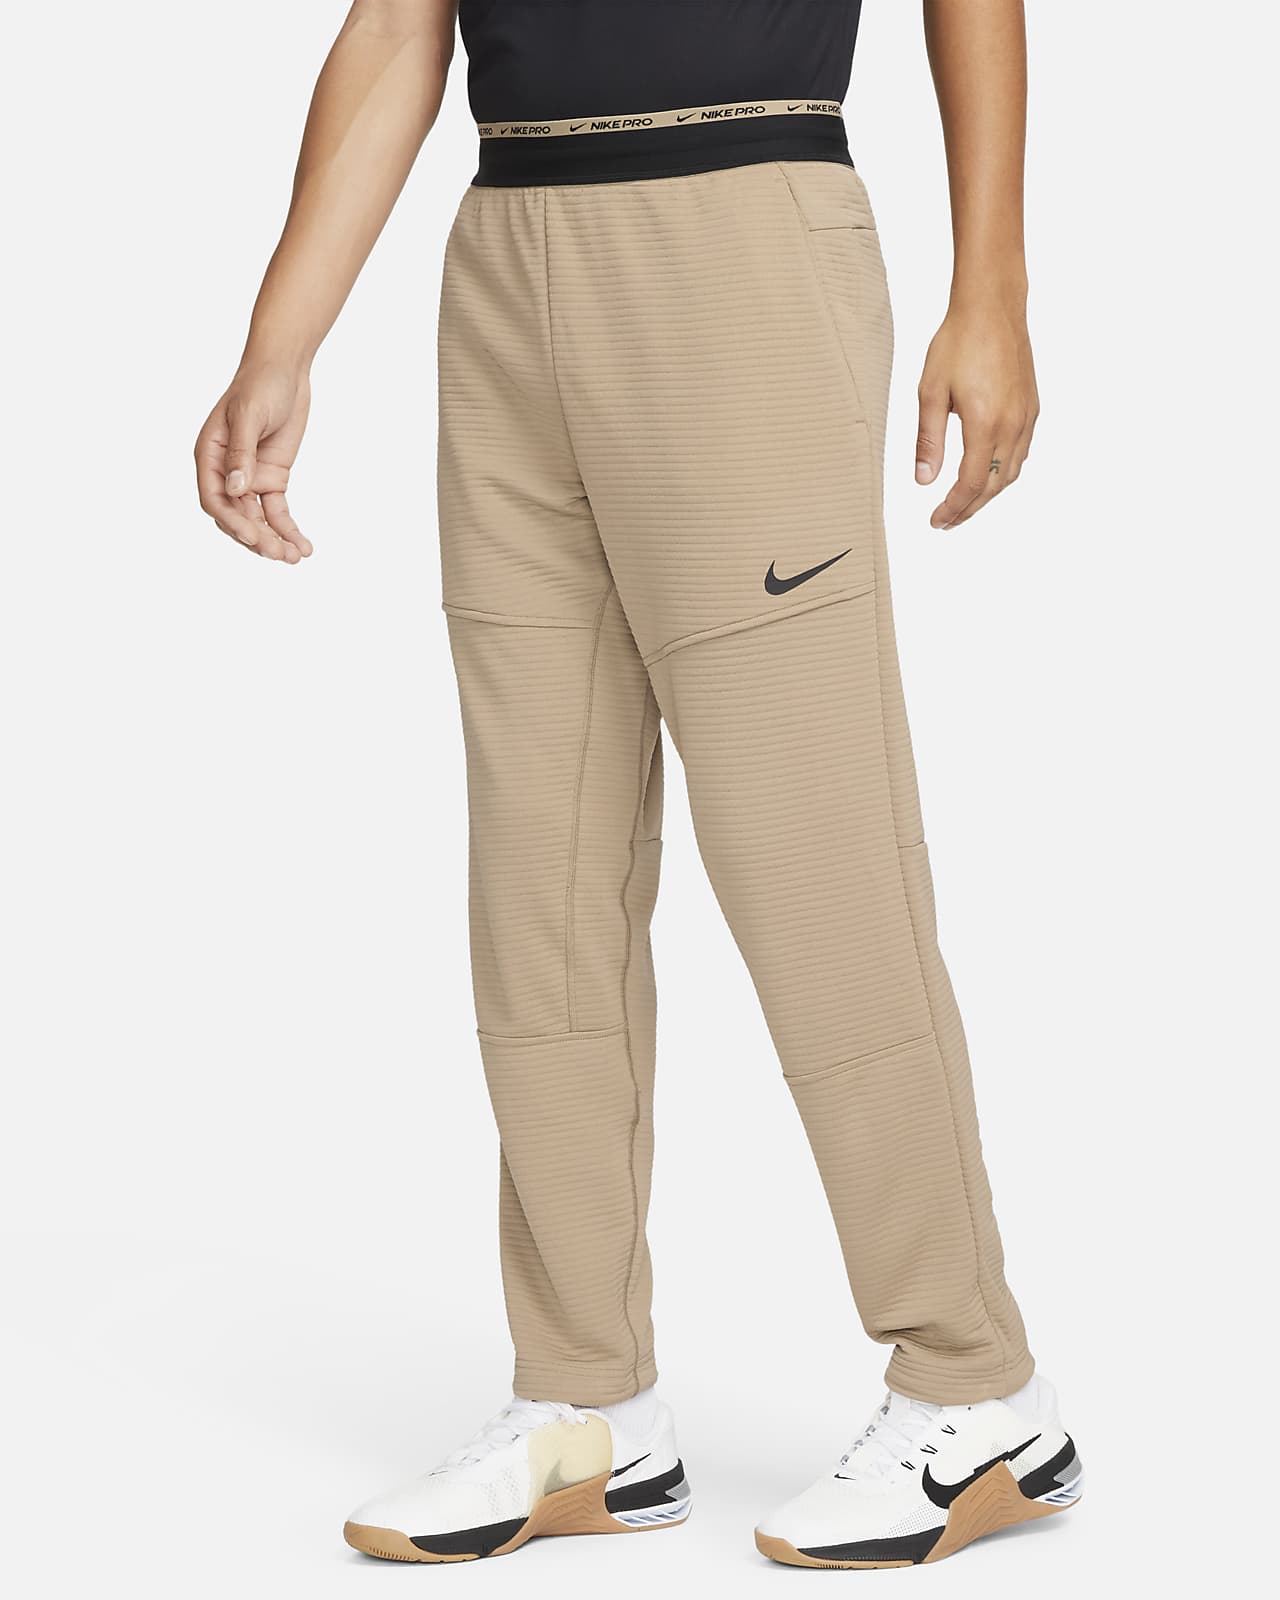 Majestuoso Cuarto Curso de colisión Nike Men's Dri-FIT Fleece Fitness Pants. Nike.com